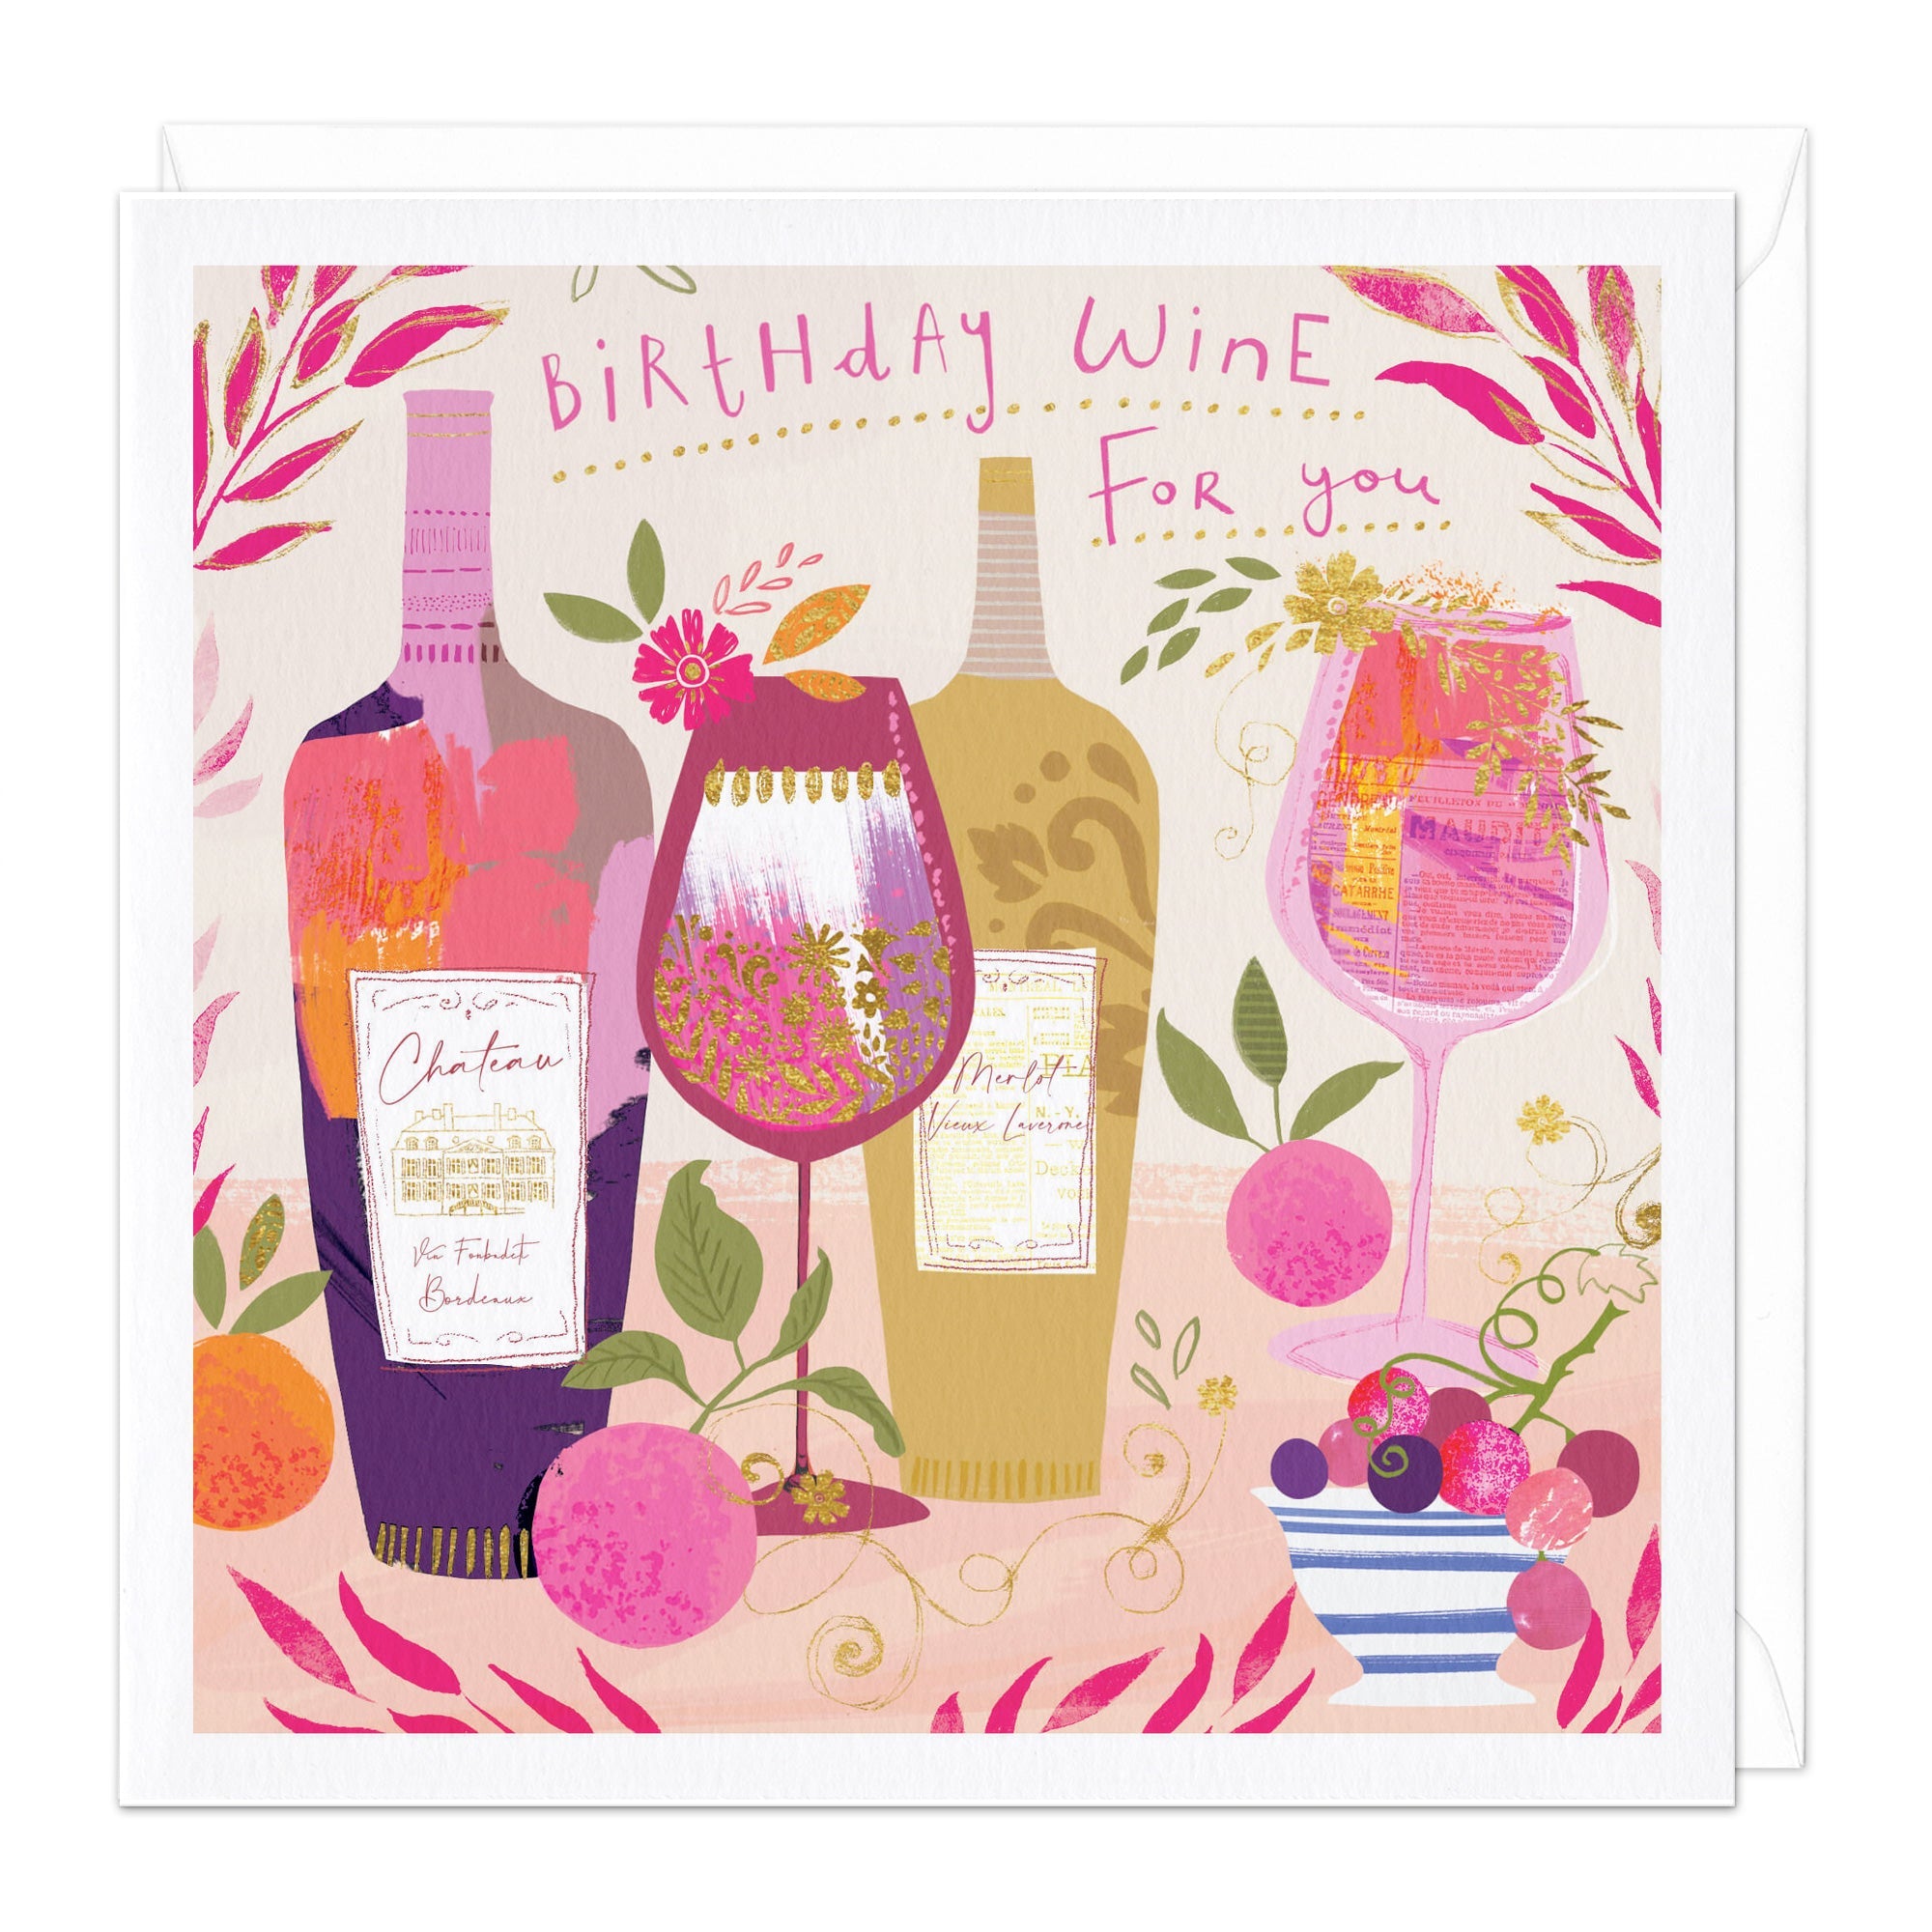 Birthday Wine For You Birthday Card